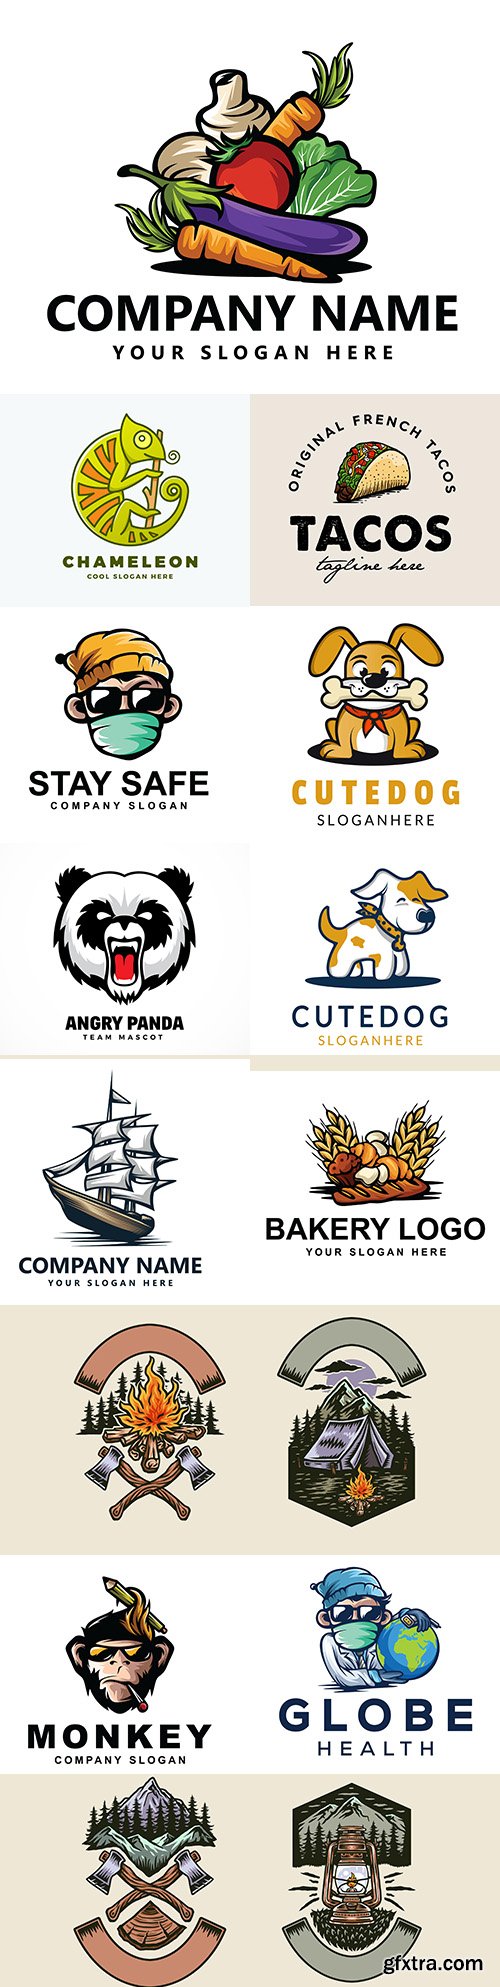 Brand name company logos business corporate design